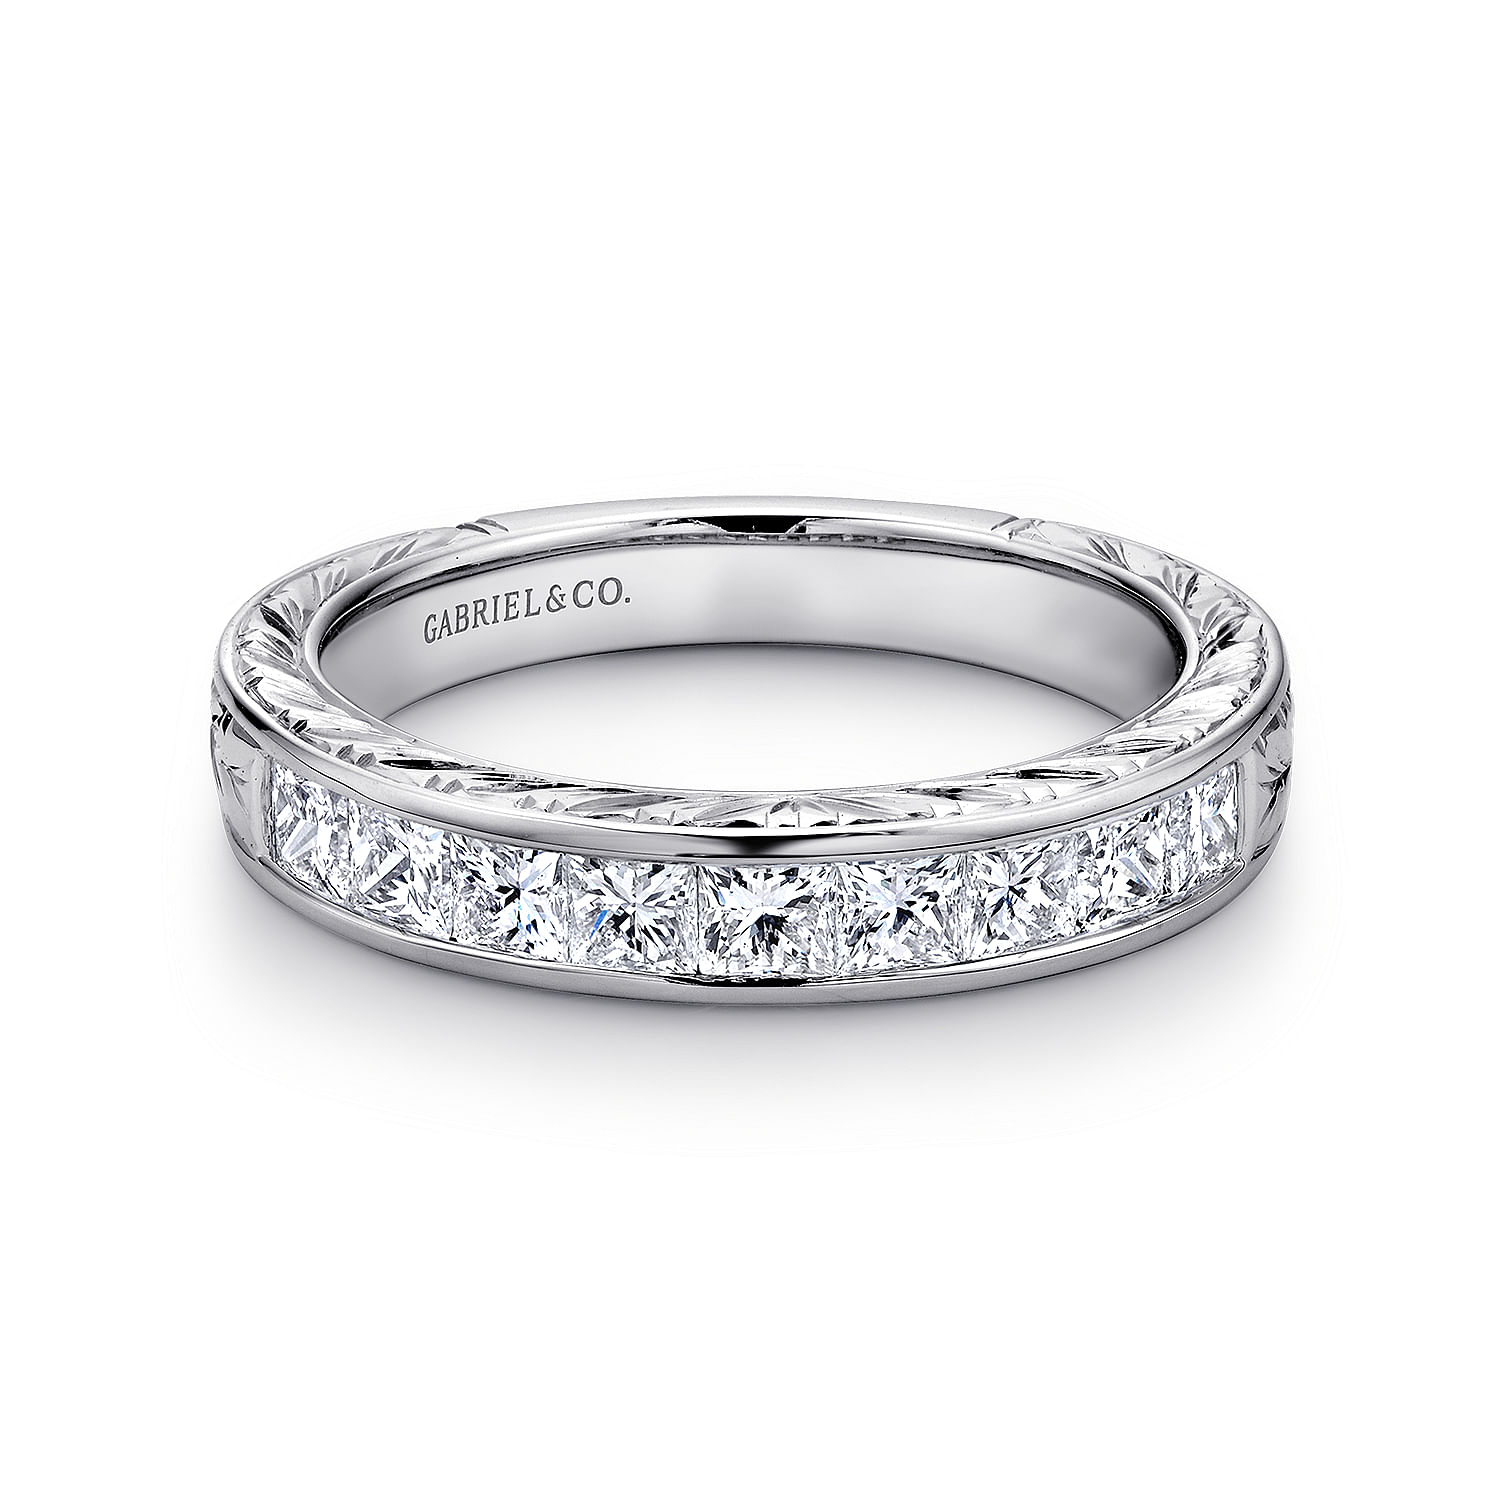 14K White Gold Princess Cut 9 Stone Channel Set Diamond Wedding Band with Engraving